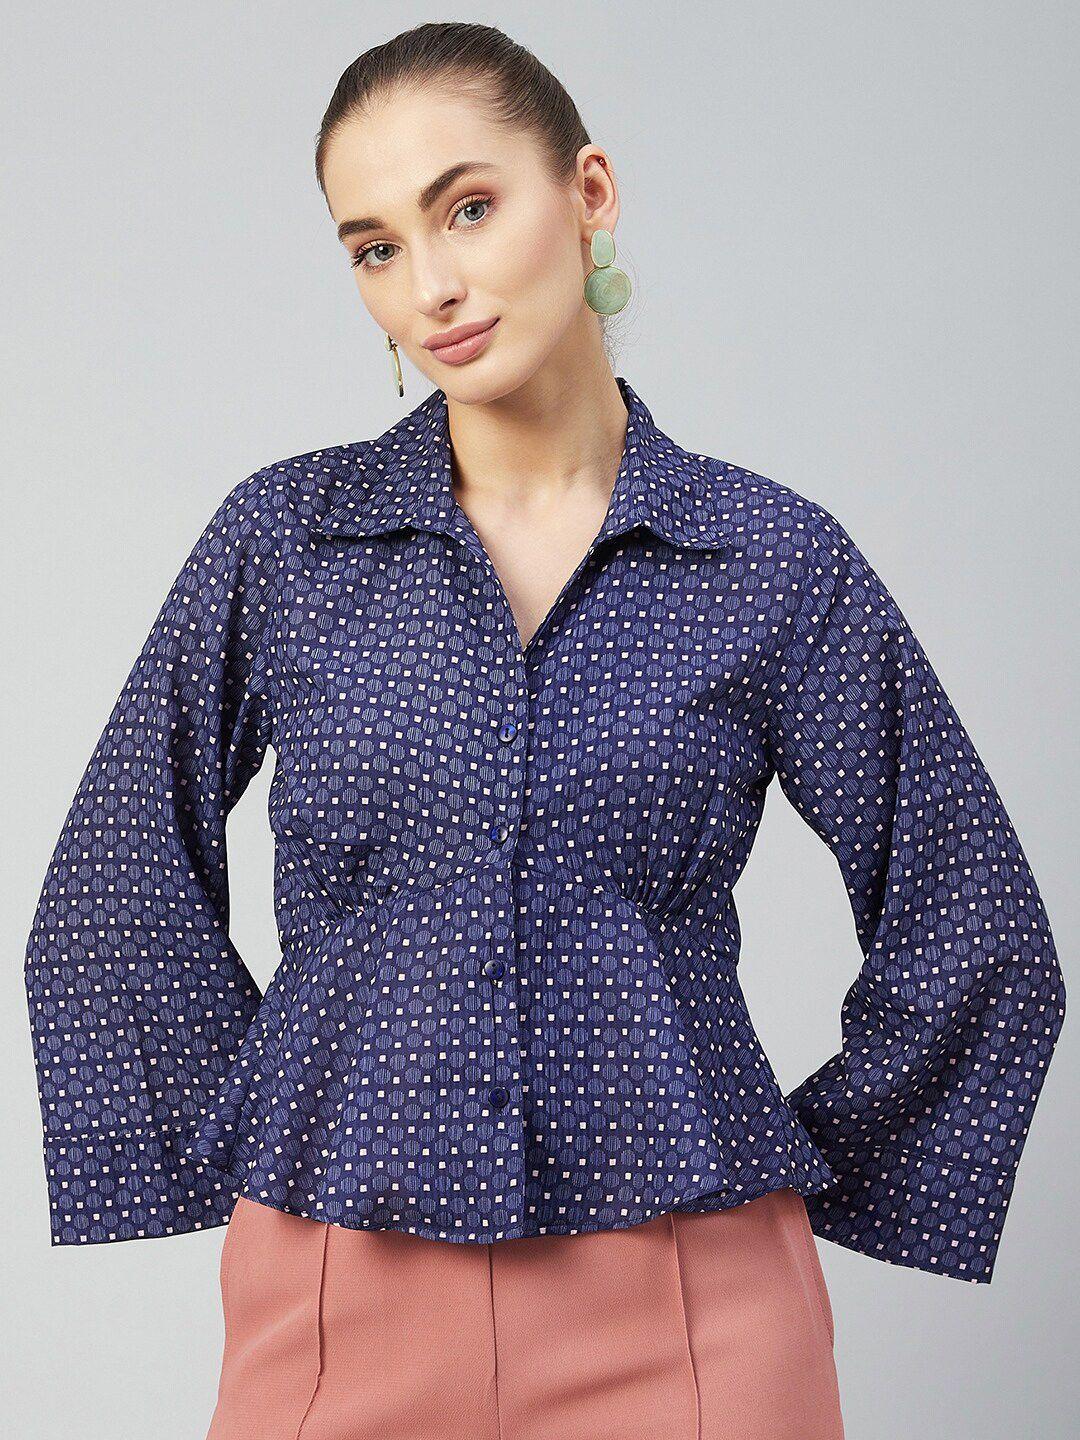 carlton-london-navy-blue-geometric-print-crepe-shirt-style-top